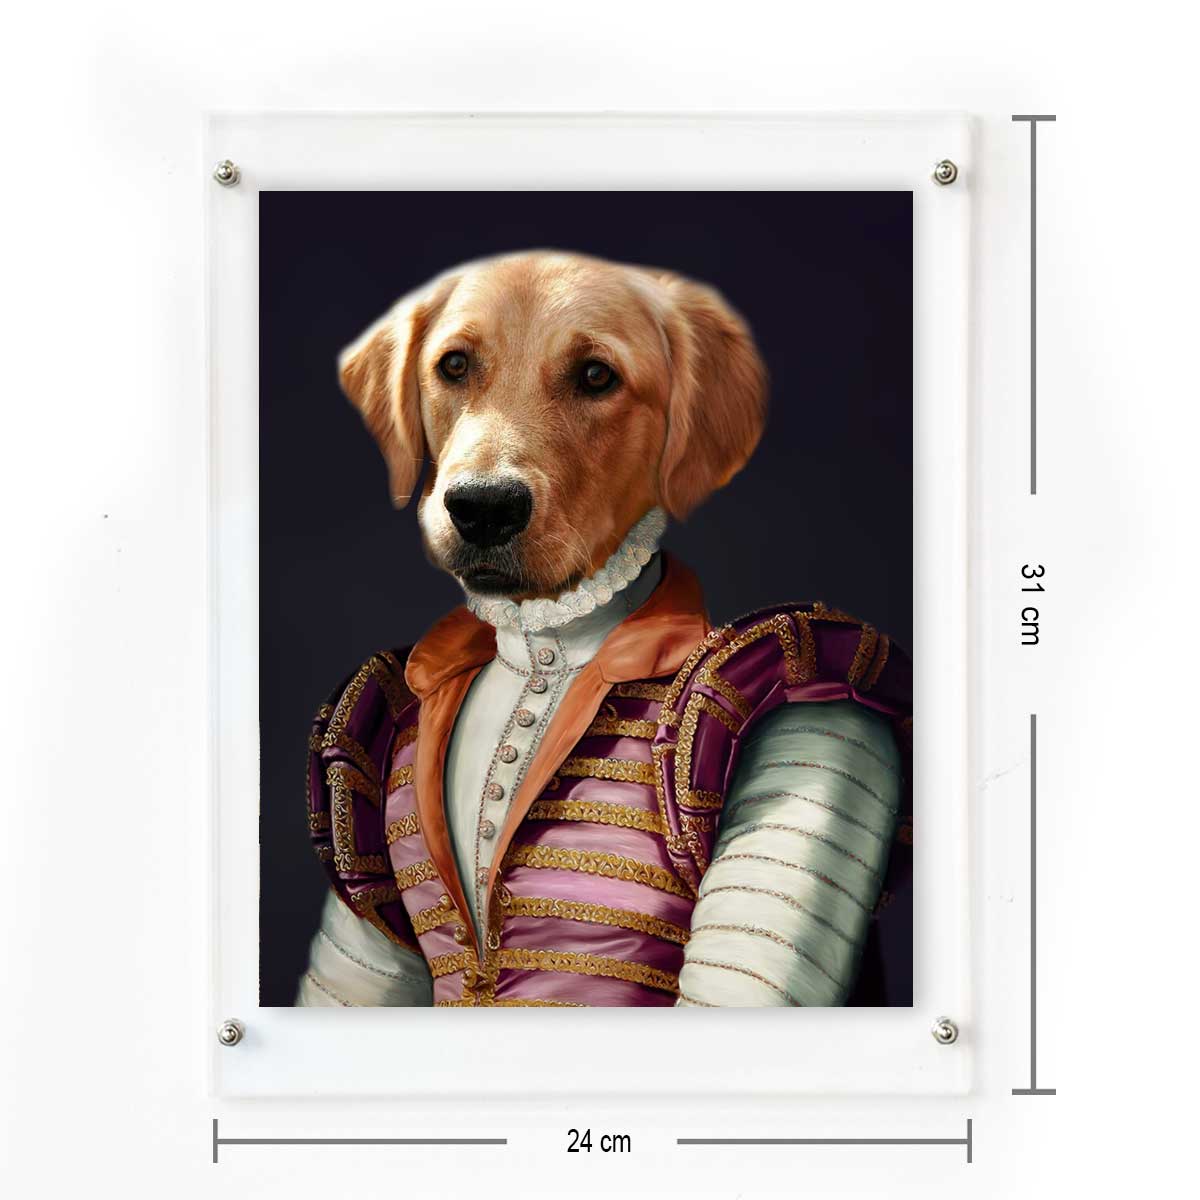 The Prince Pet Digital Portrait Photo Frame